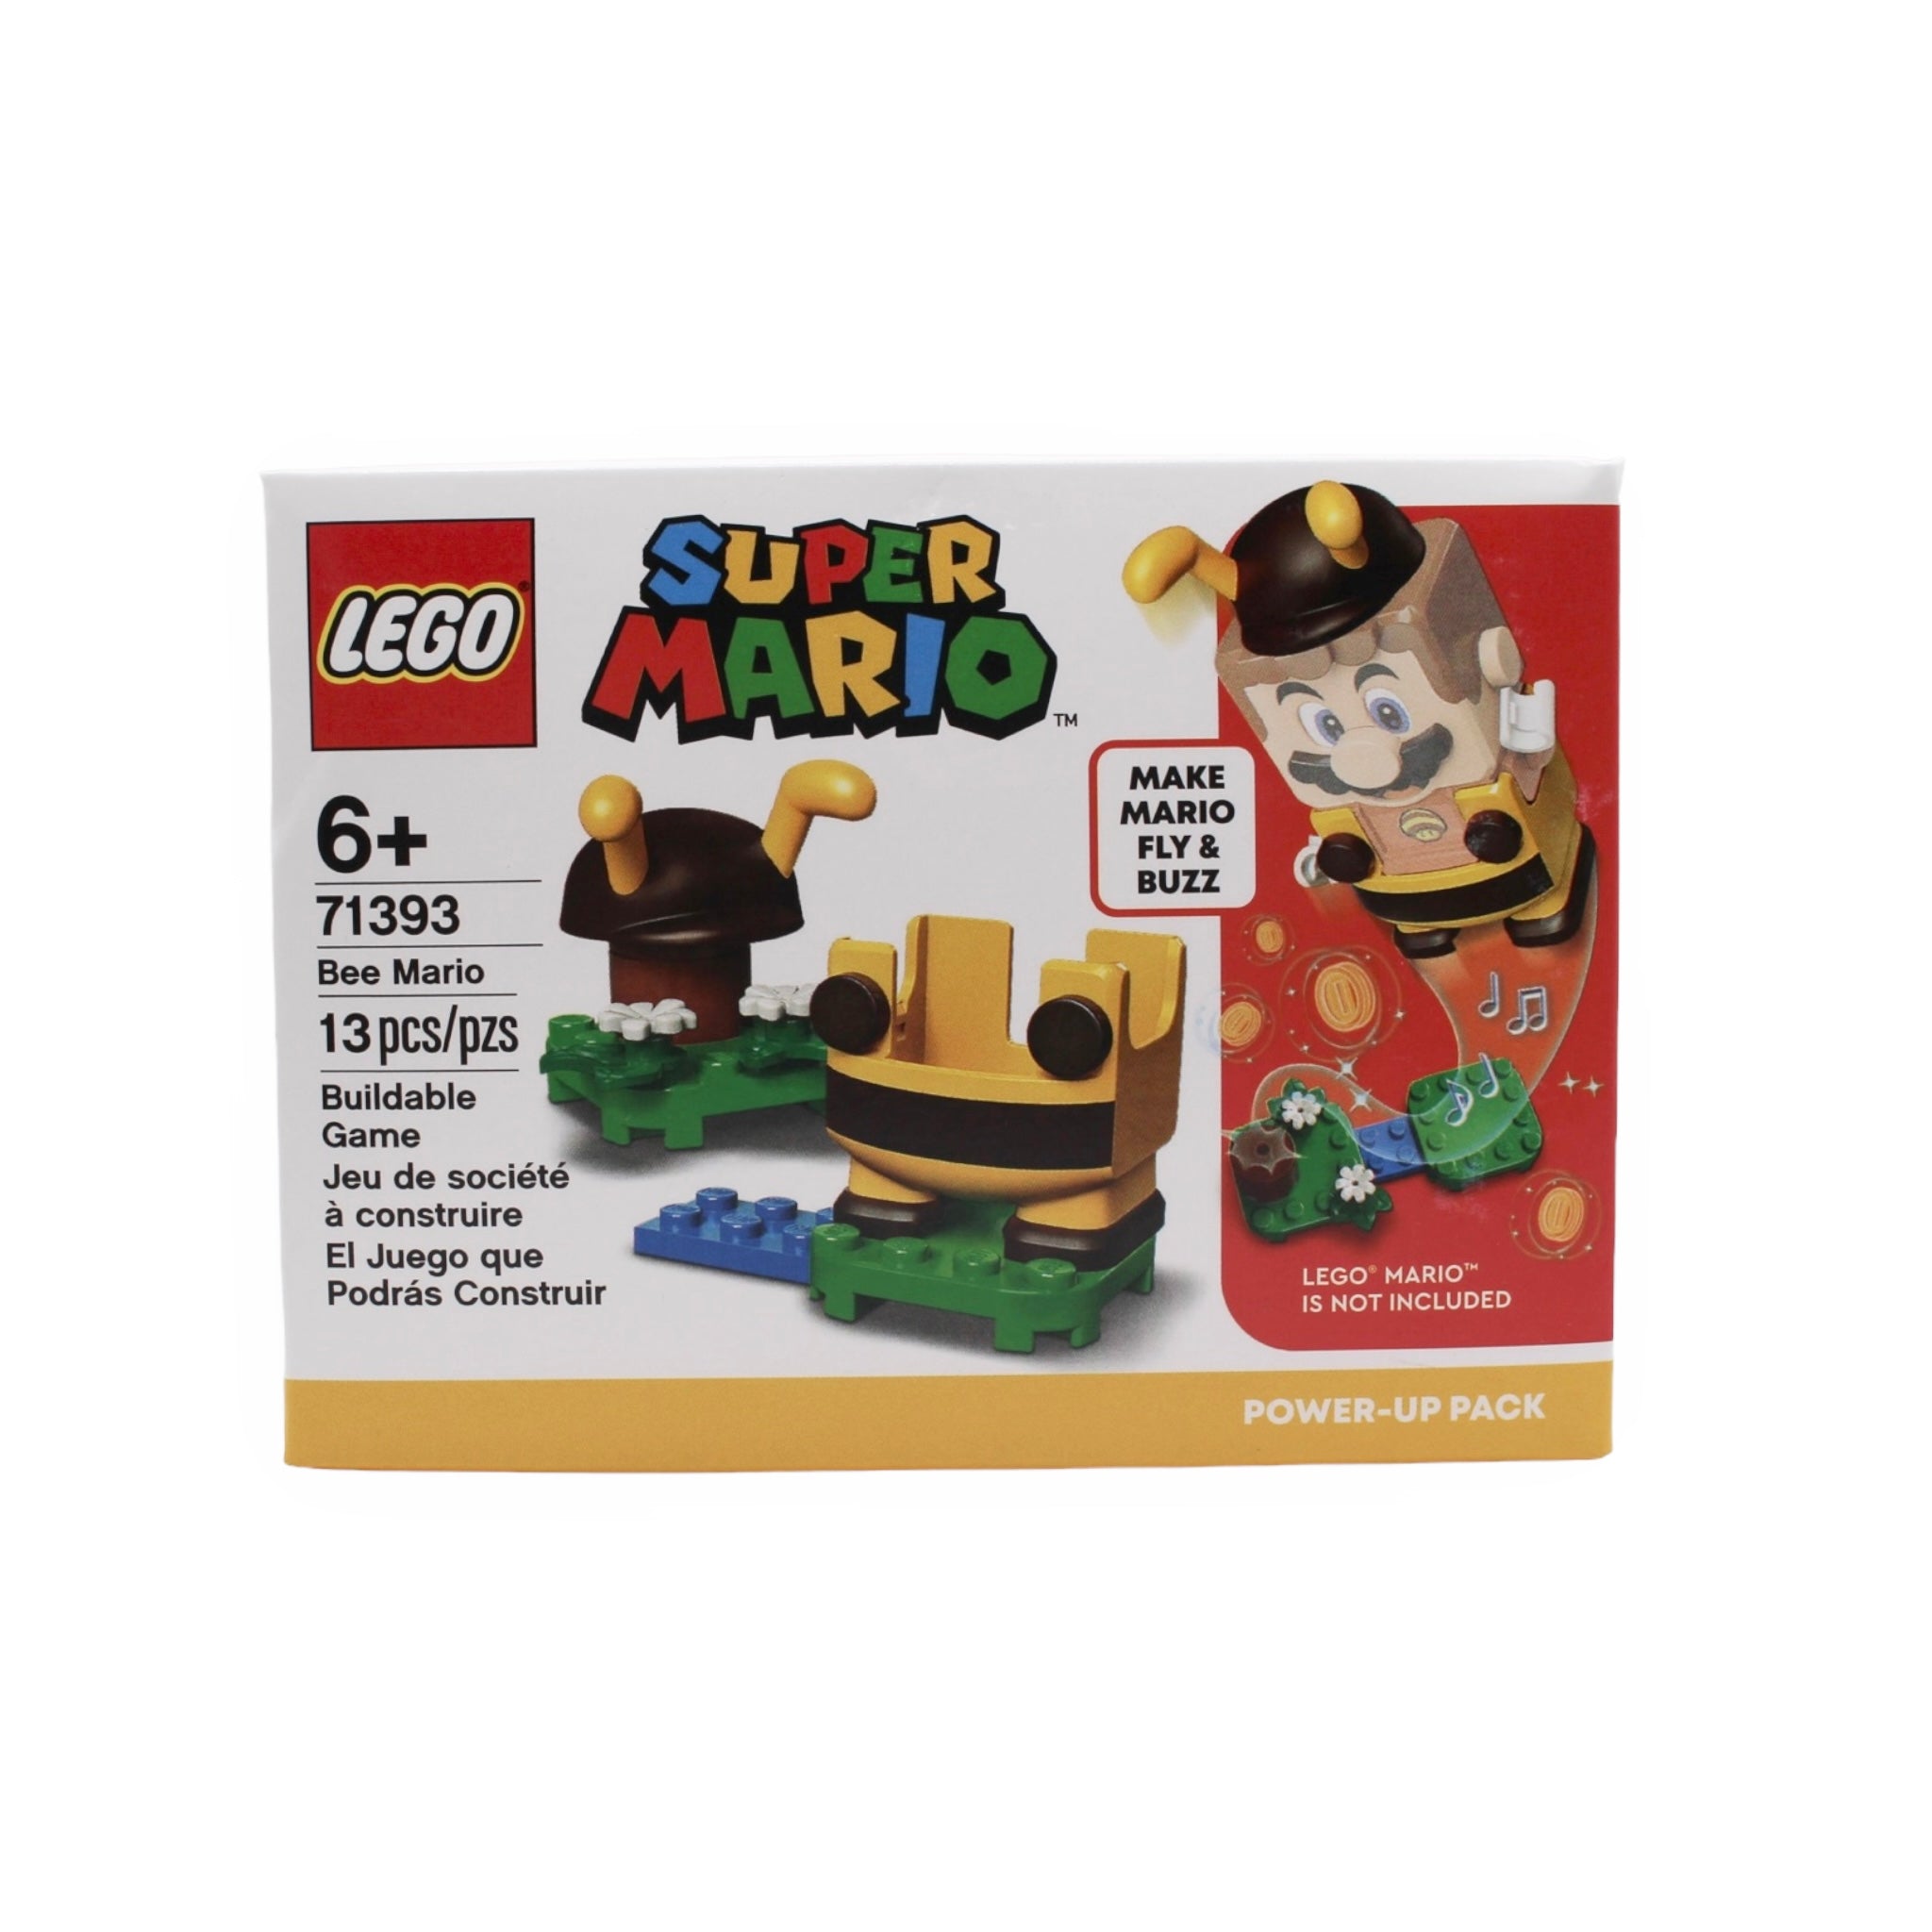 Retired Set 71393 Super Mario Bee Mario Power-Up Pack